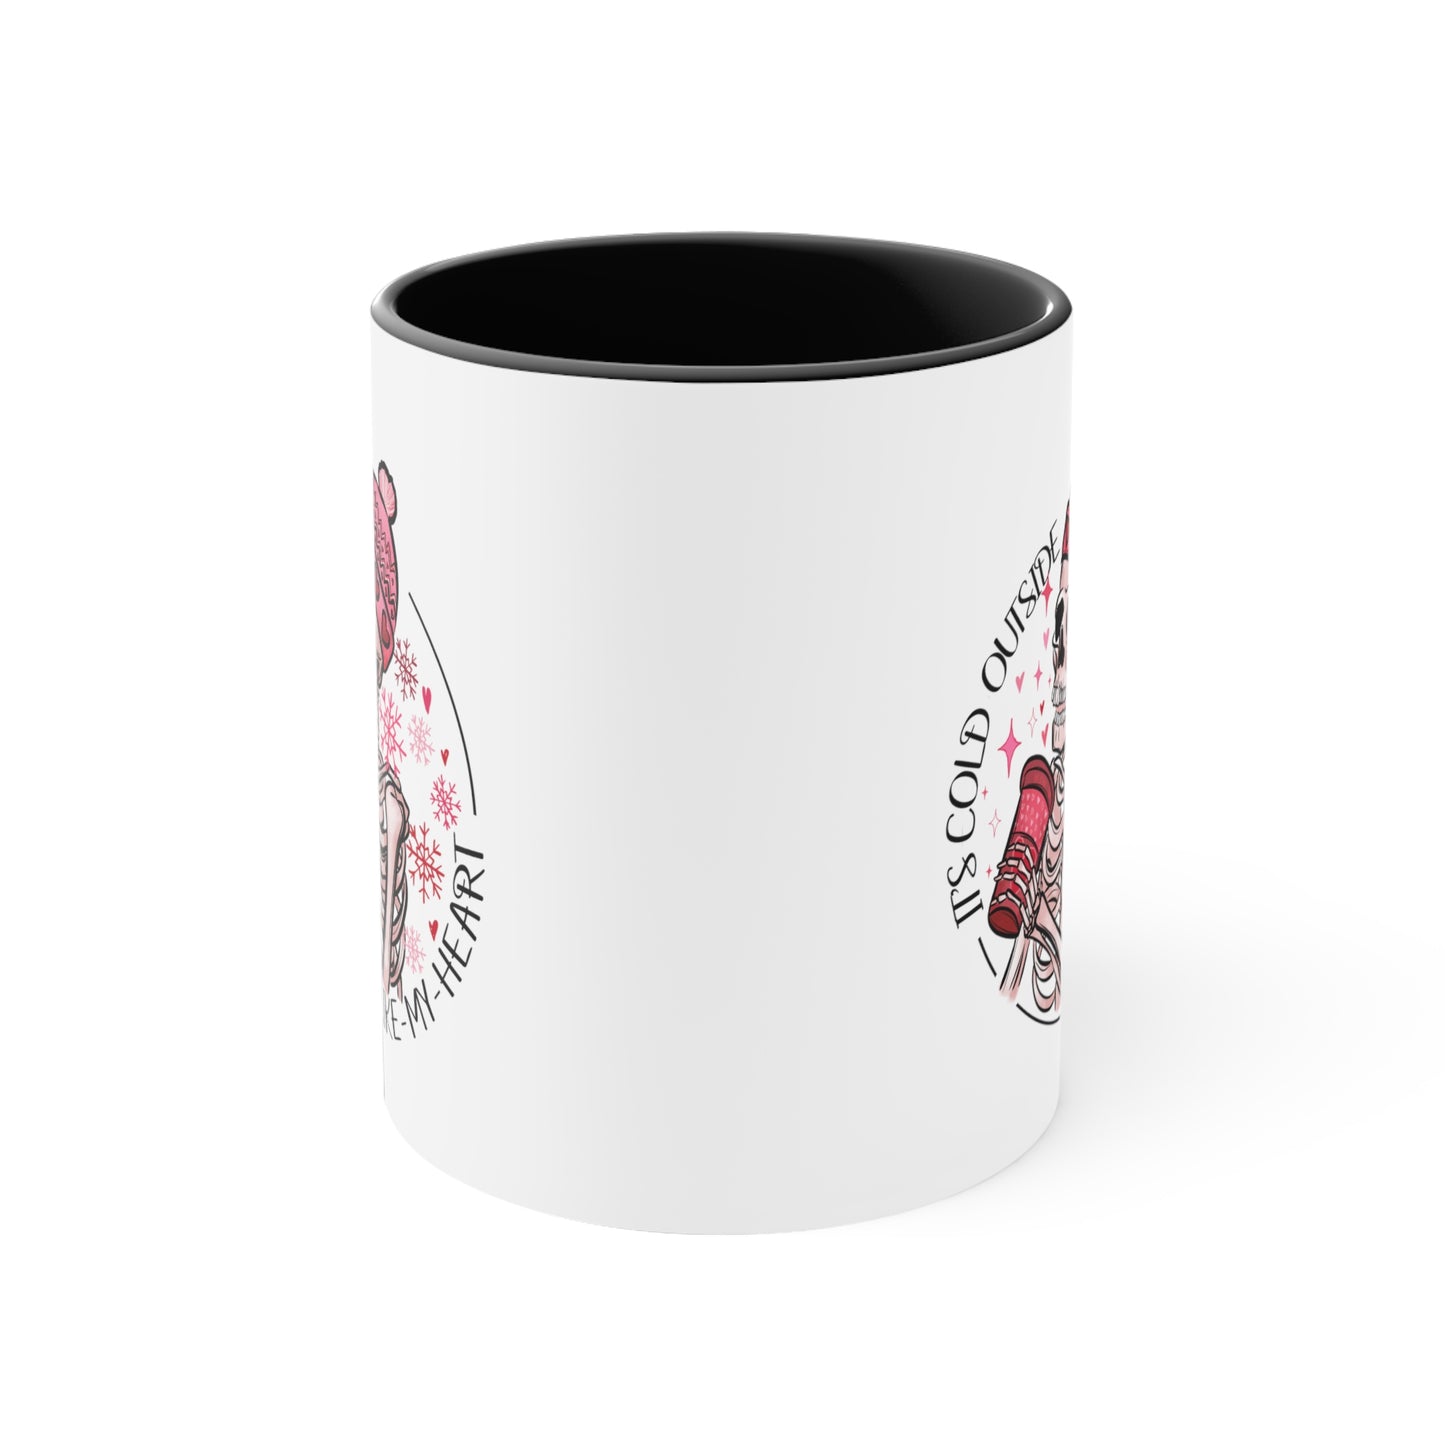 Skeleton Valentine Gothic Accent Coffee Mug, Sarcastic Funny Dark  11oz